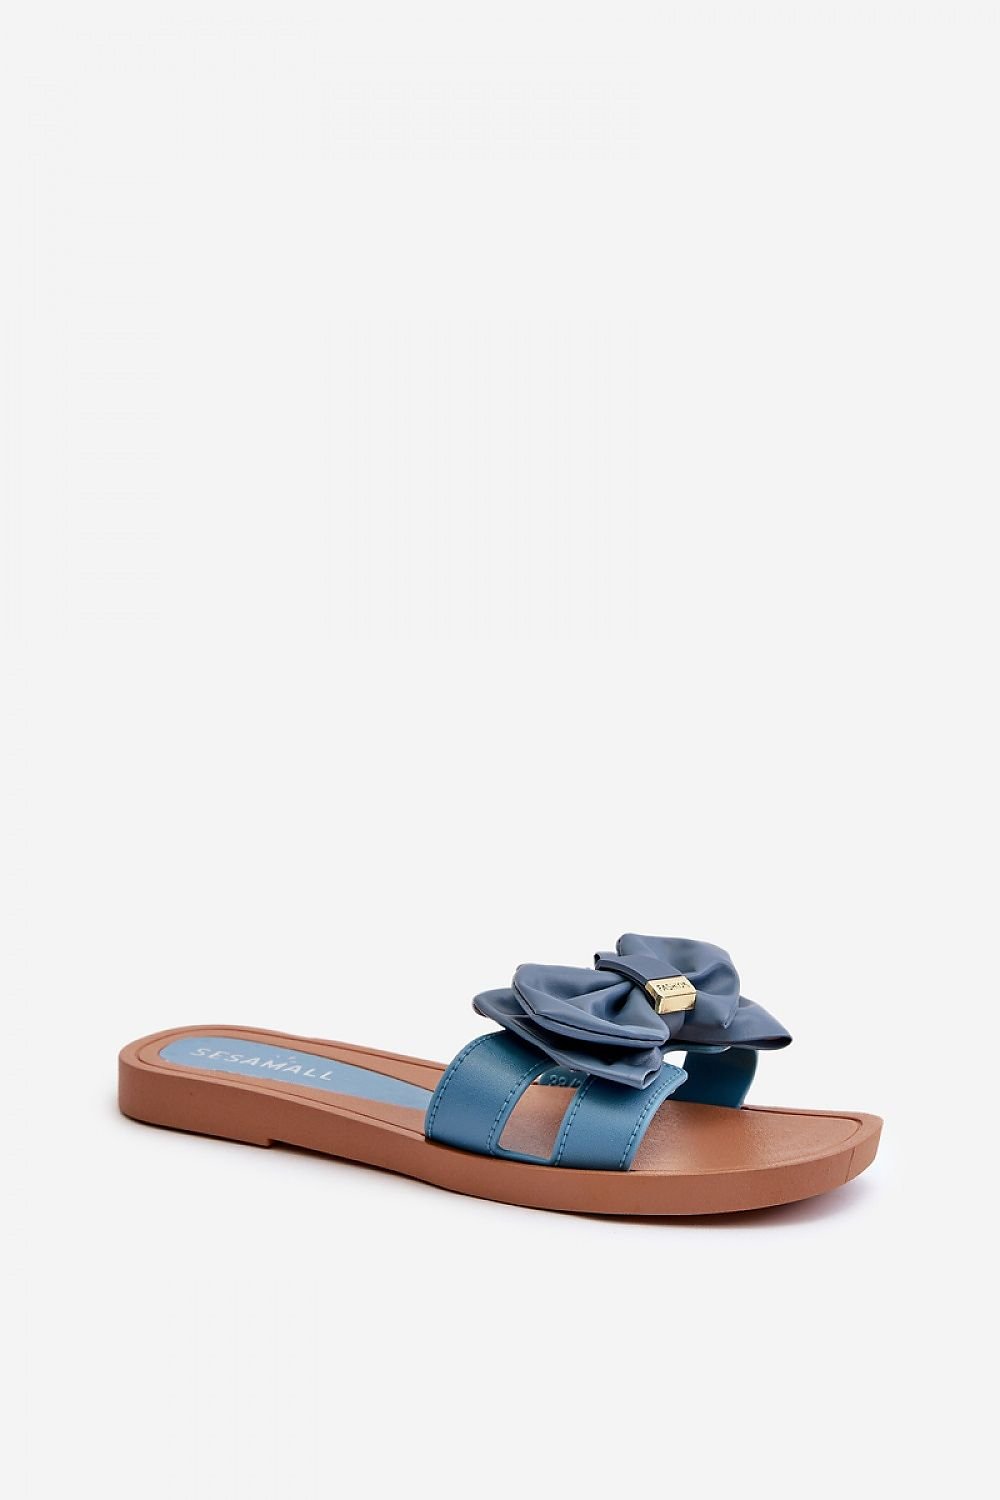 TEEK - Beveled Bow Flat Sandals SHOES TEEK MH blue 6 